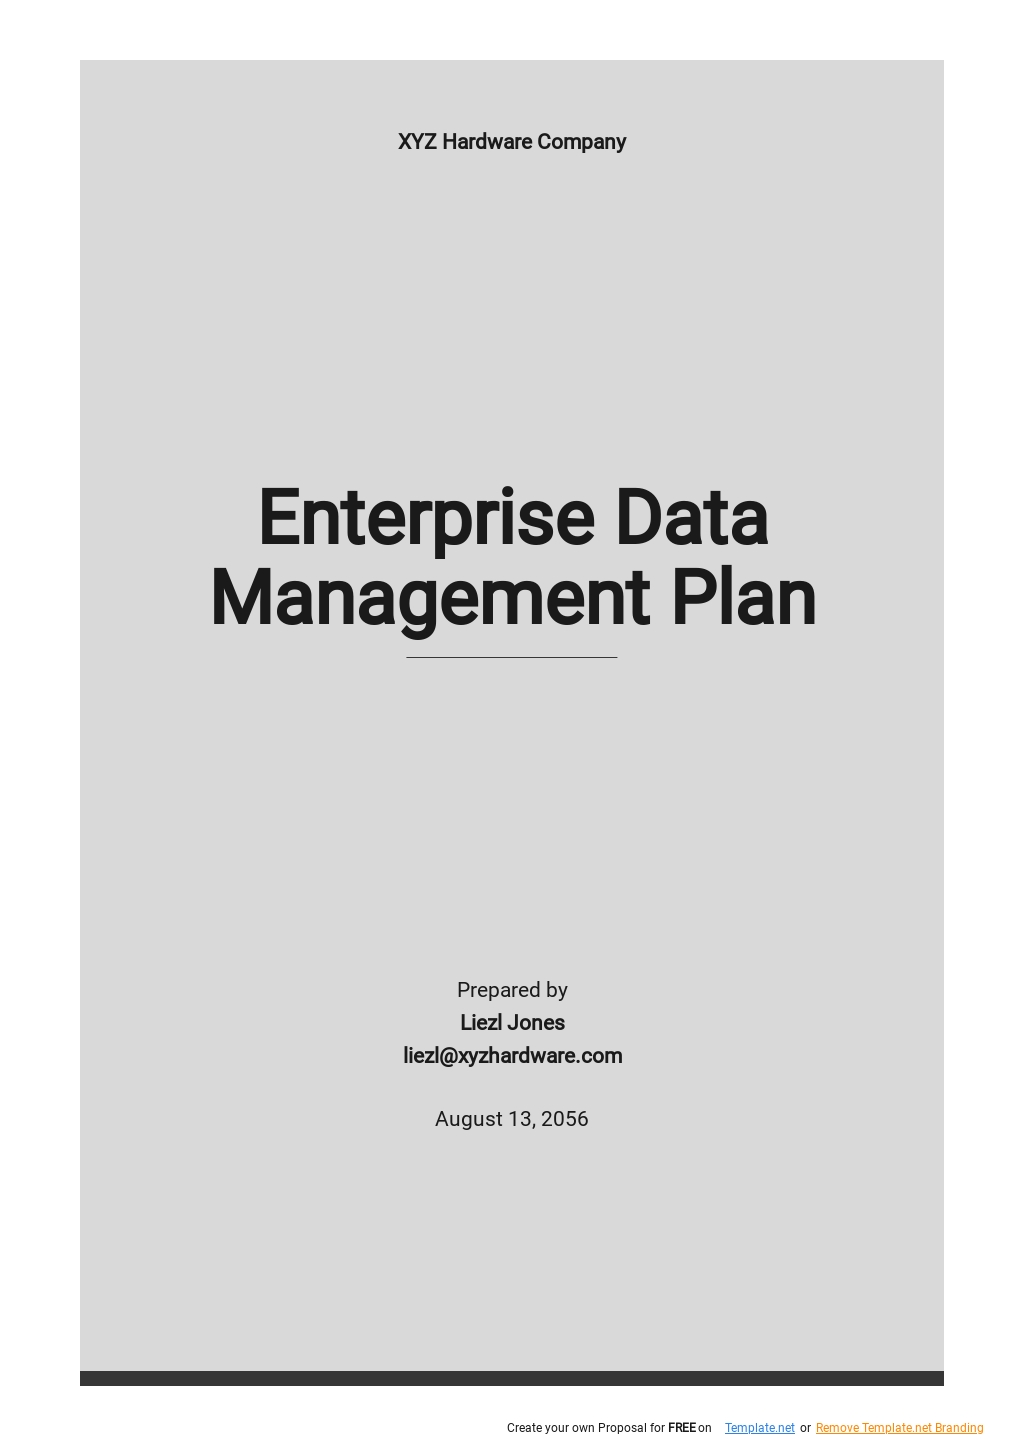 Enterprise Data Management Plan Template .jpe